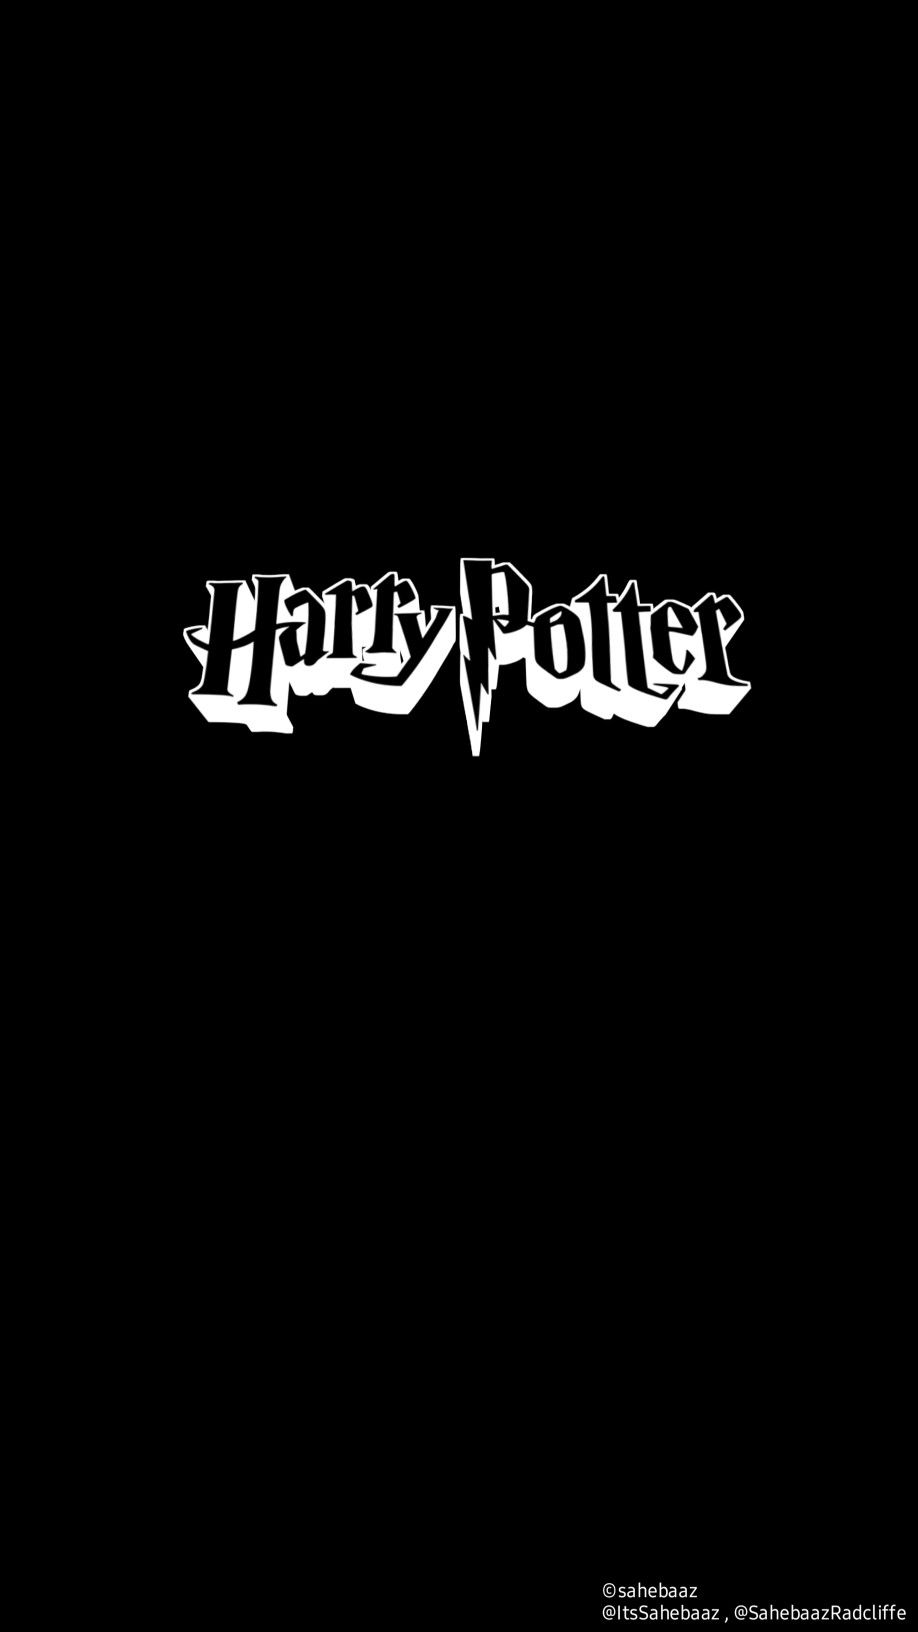 Harry Potter Black Wallpaper. Harry potter logo, Harry potter wallpaper, Harry potter cast